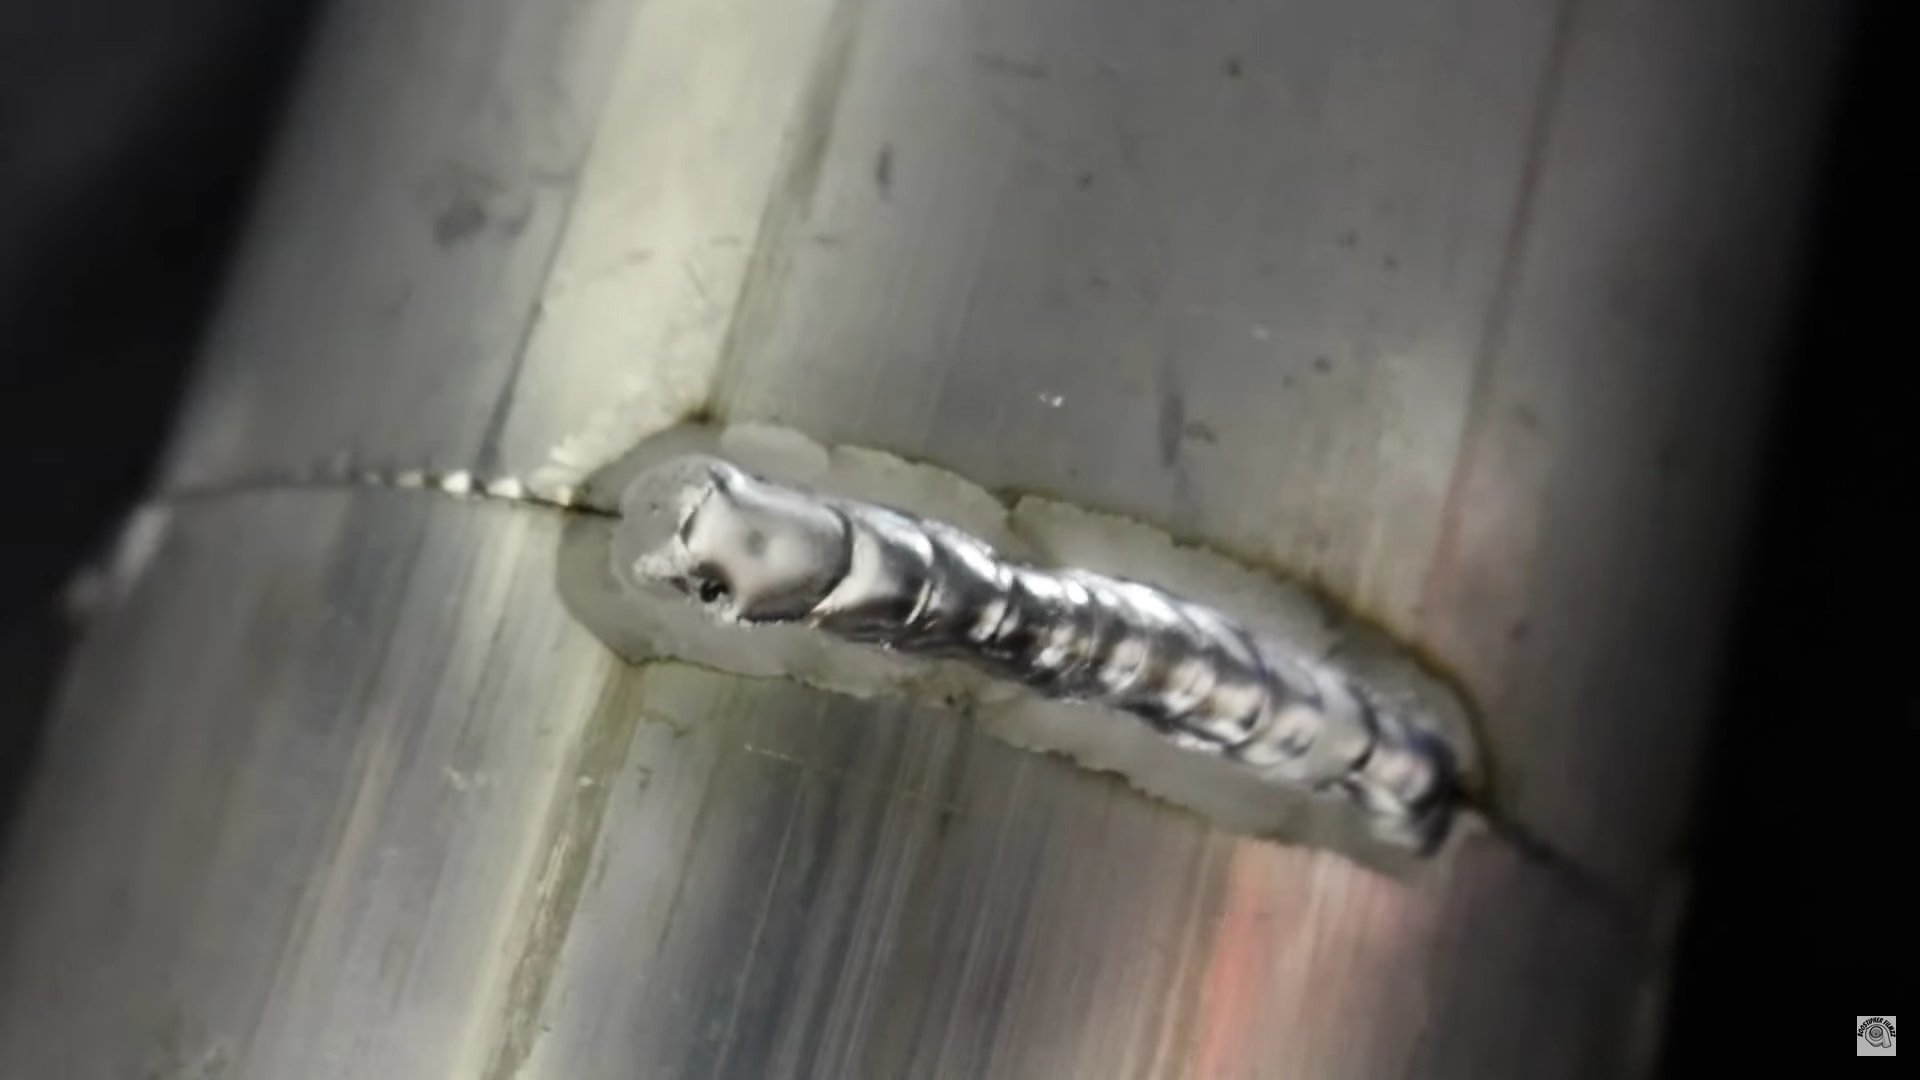 TIG welding manifold